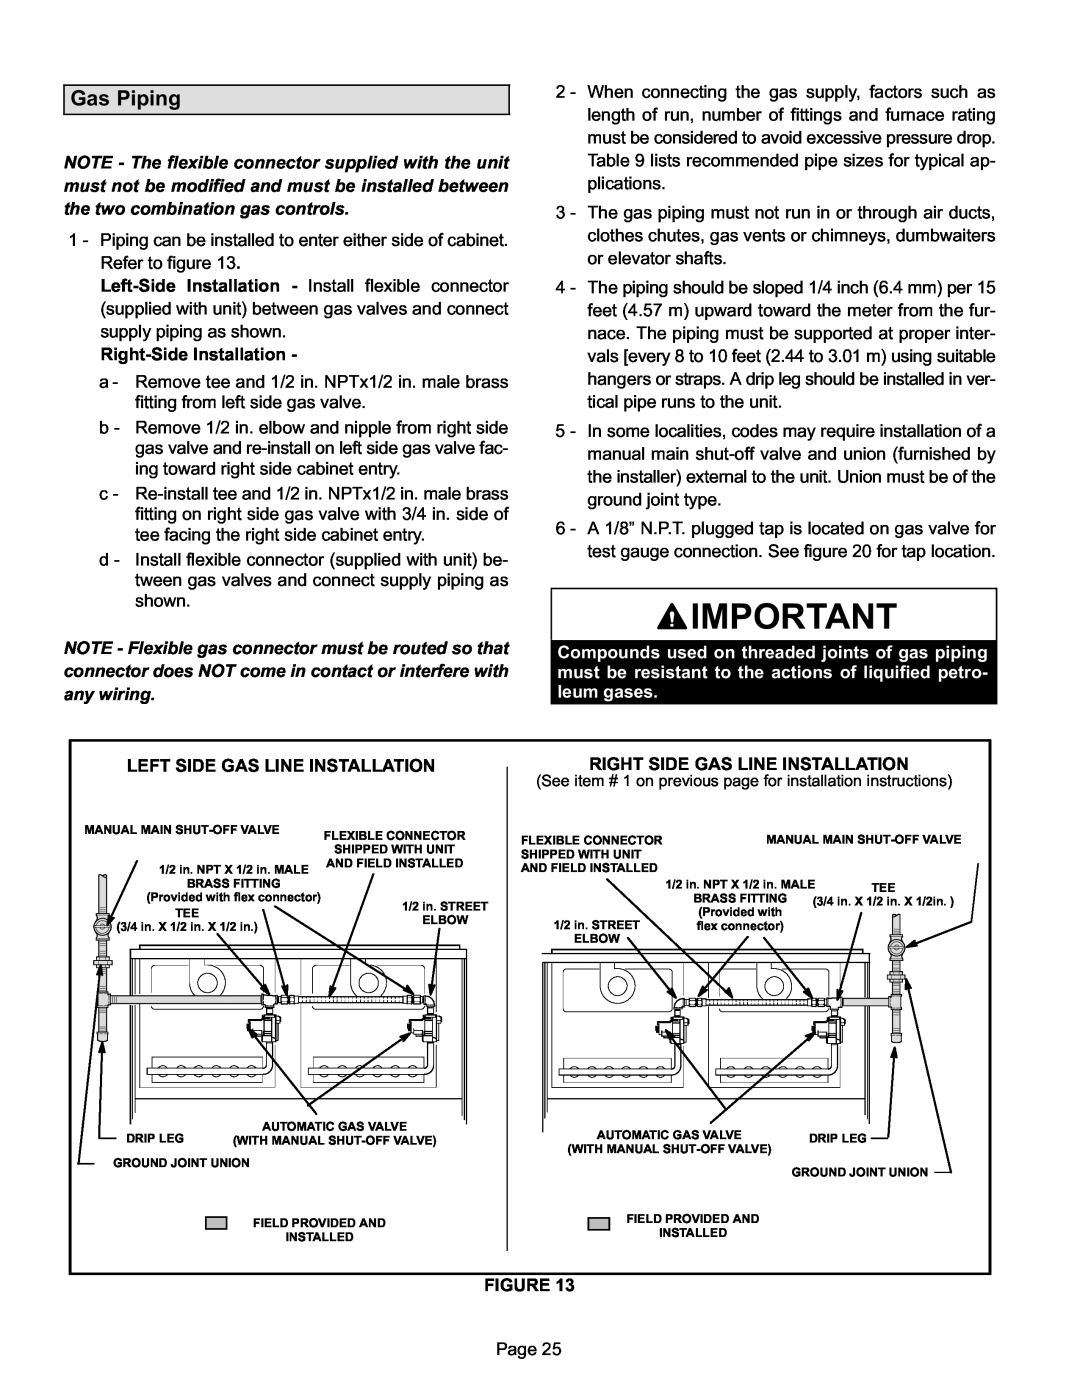 Lennox International Inc G24-200 installation instructions Gas Piping 